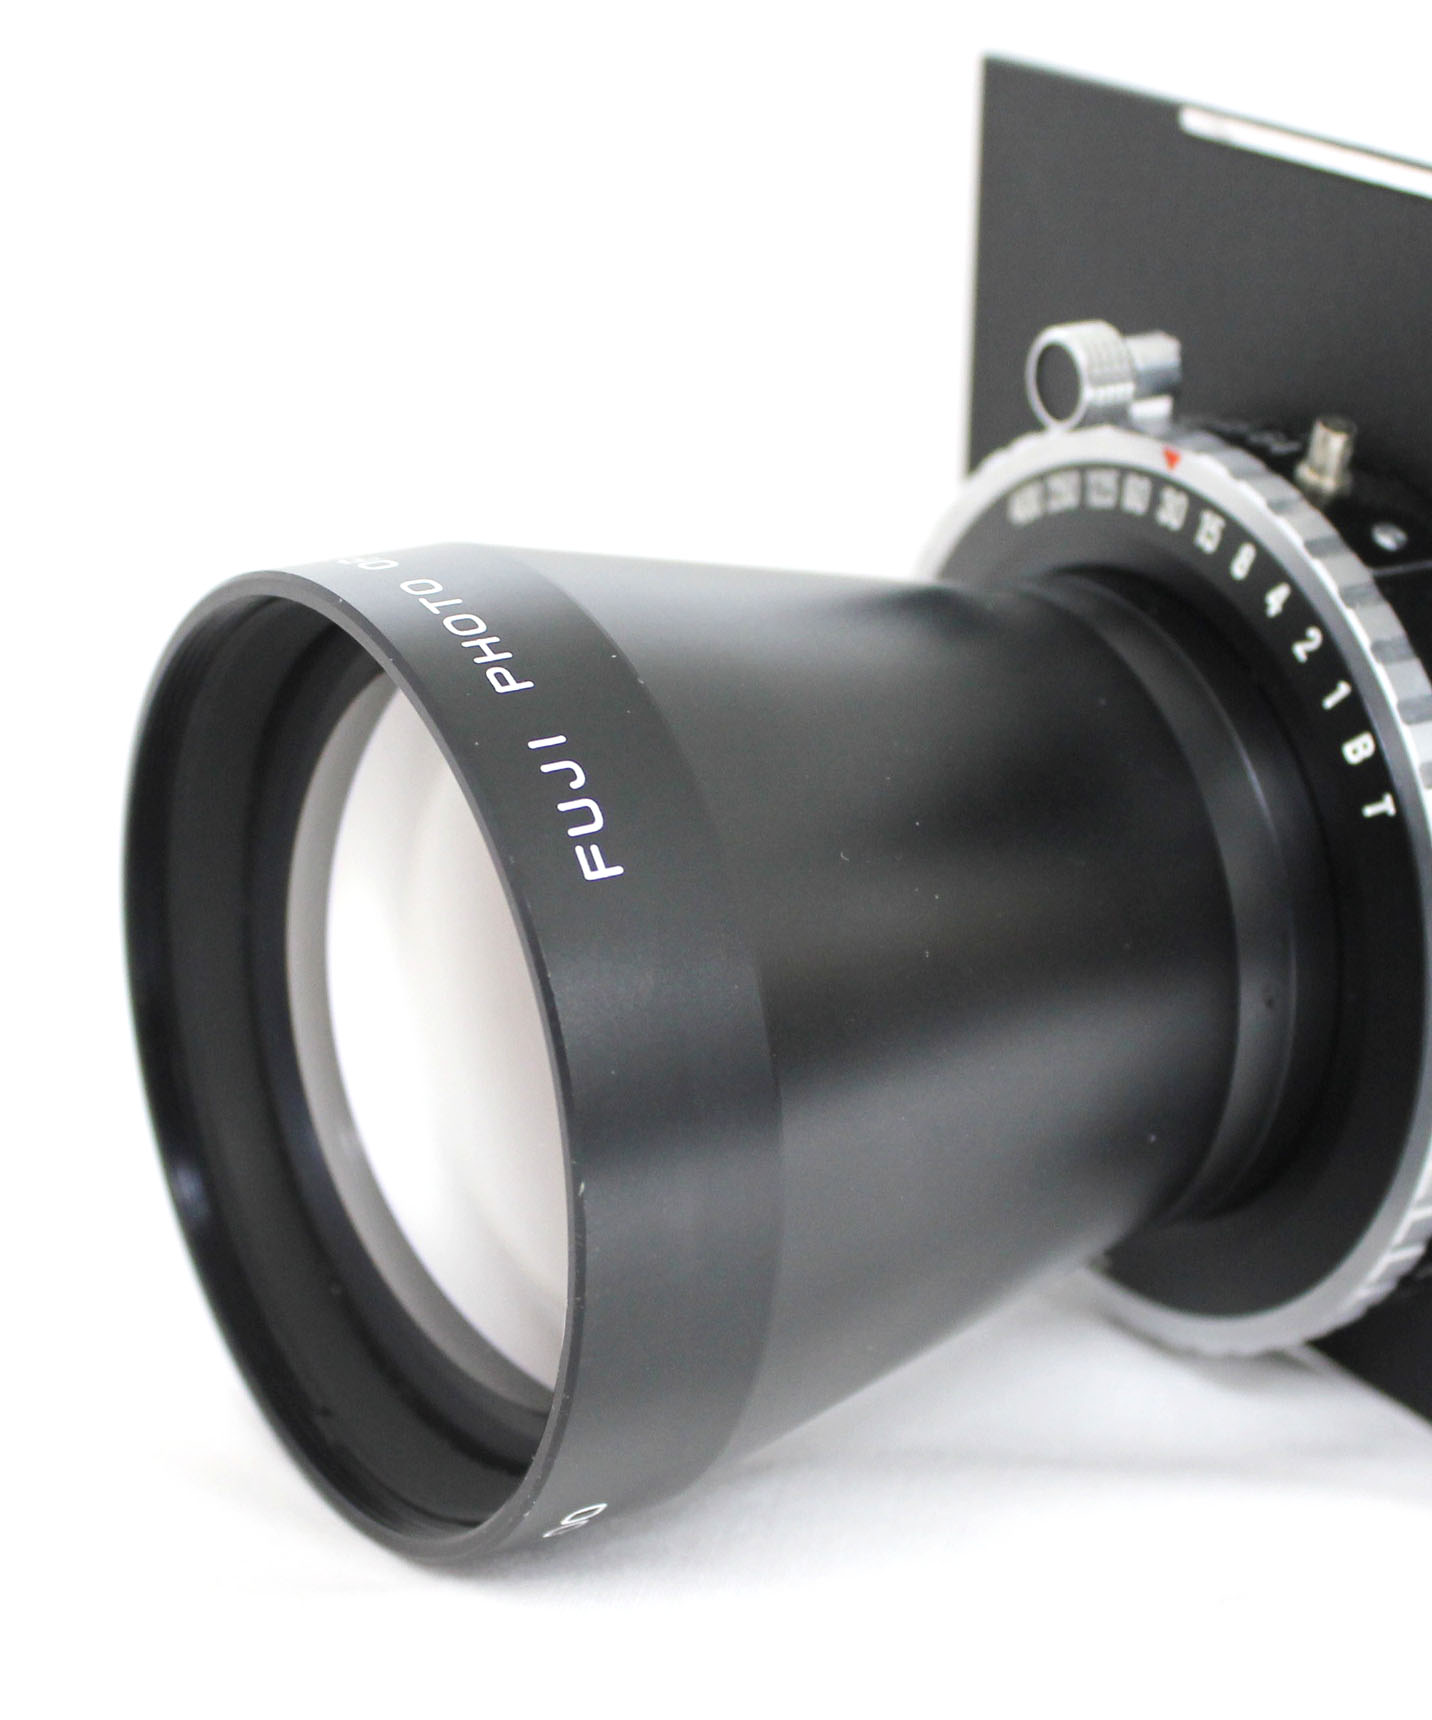  Fuji Fujinon T 400mm F/8 Large Format Lens w/ Copal Shutter from Japan Photo 1